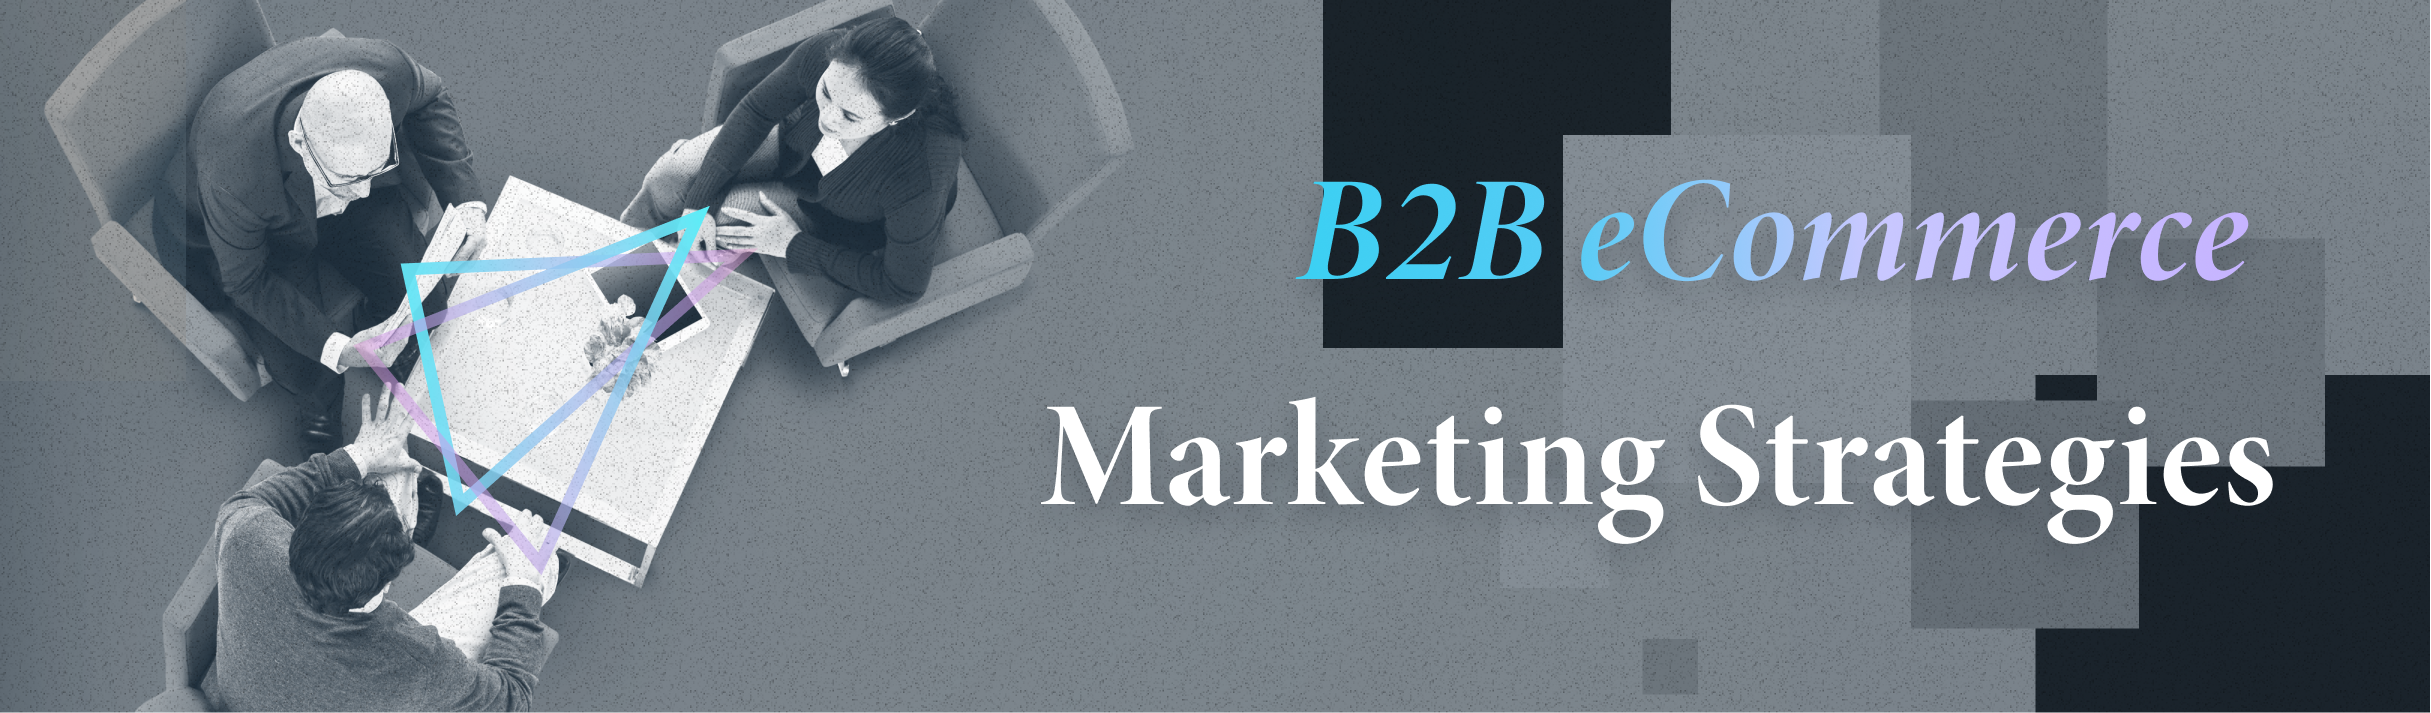 B2B eCommerce Marketing Strategies